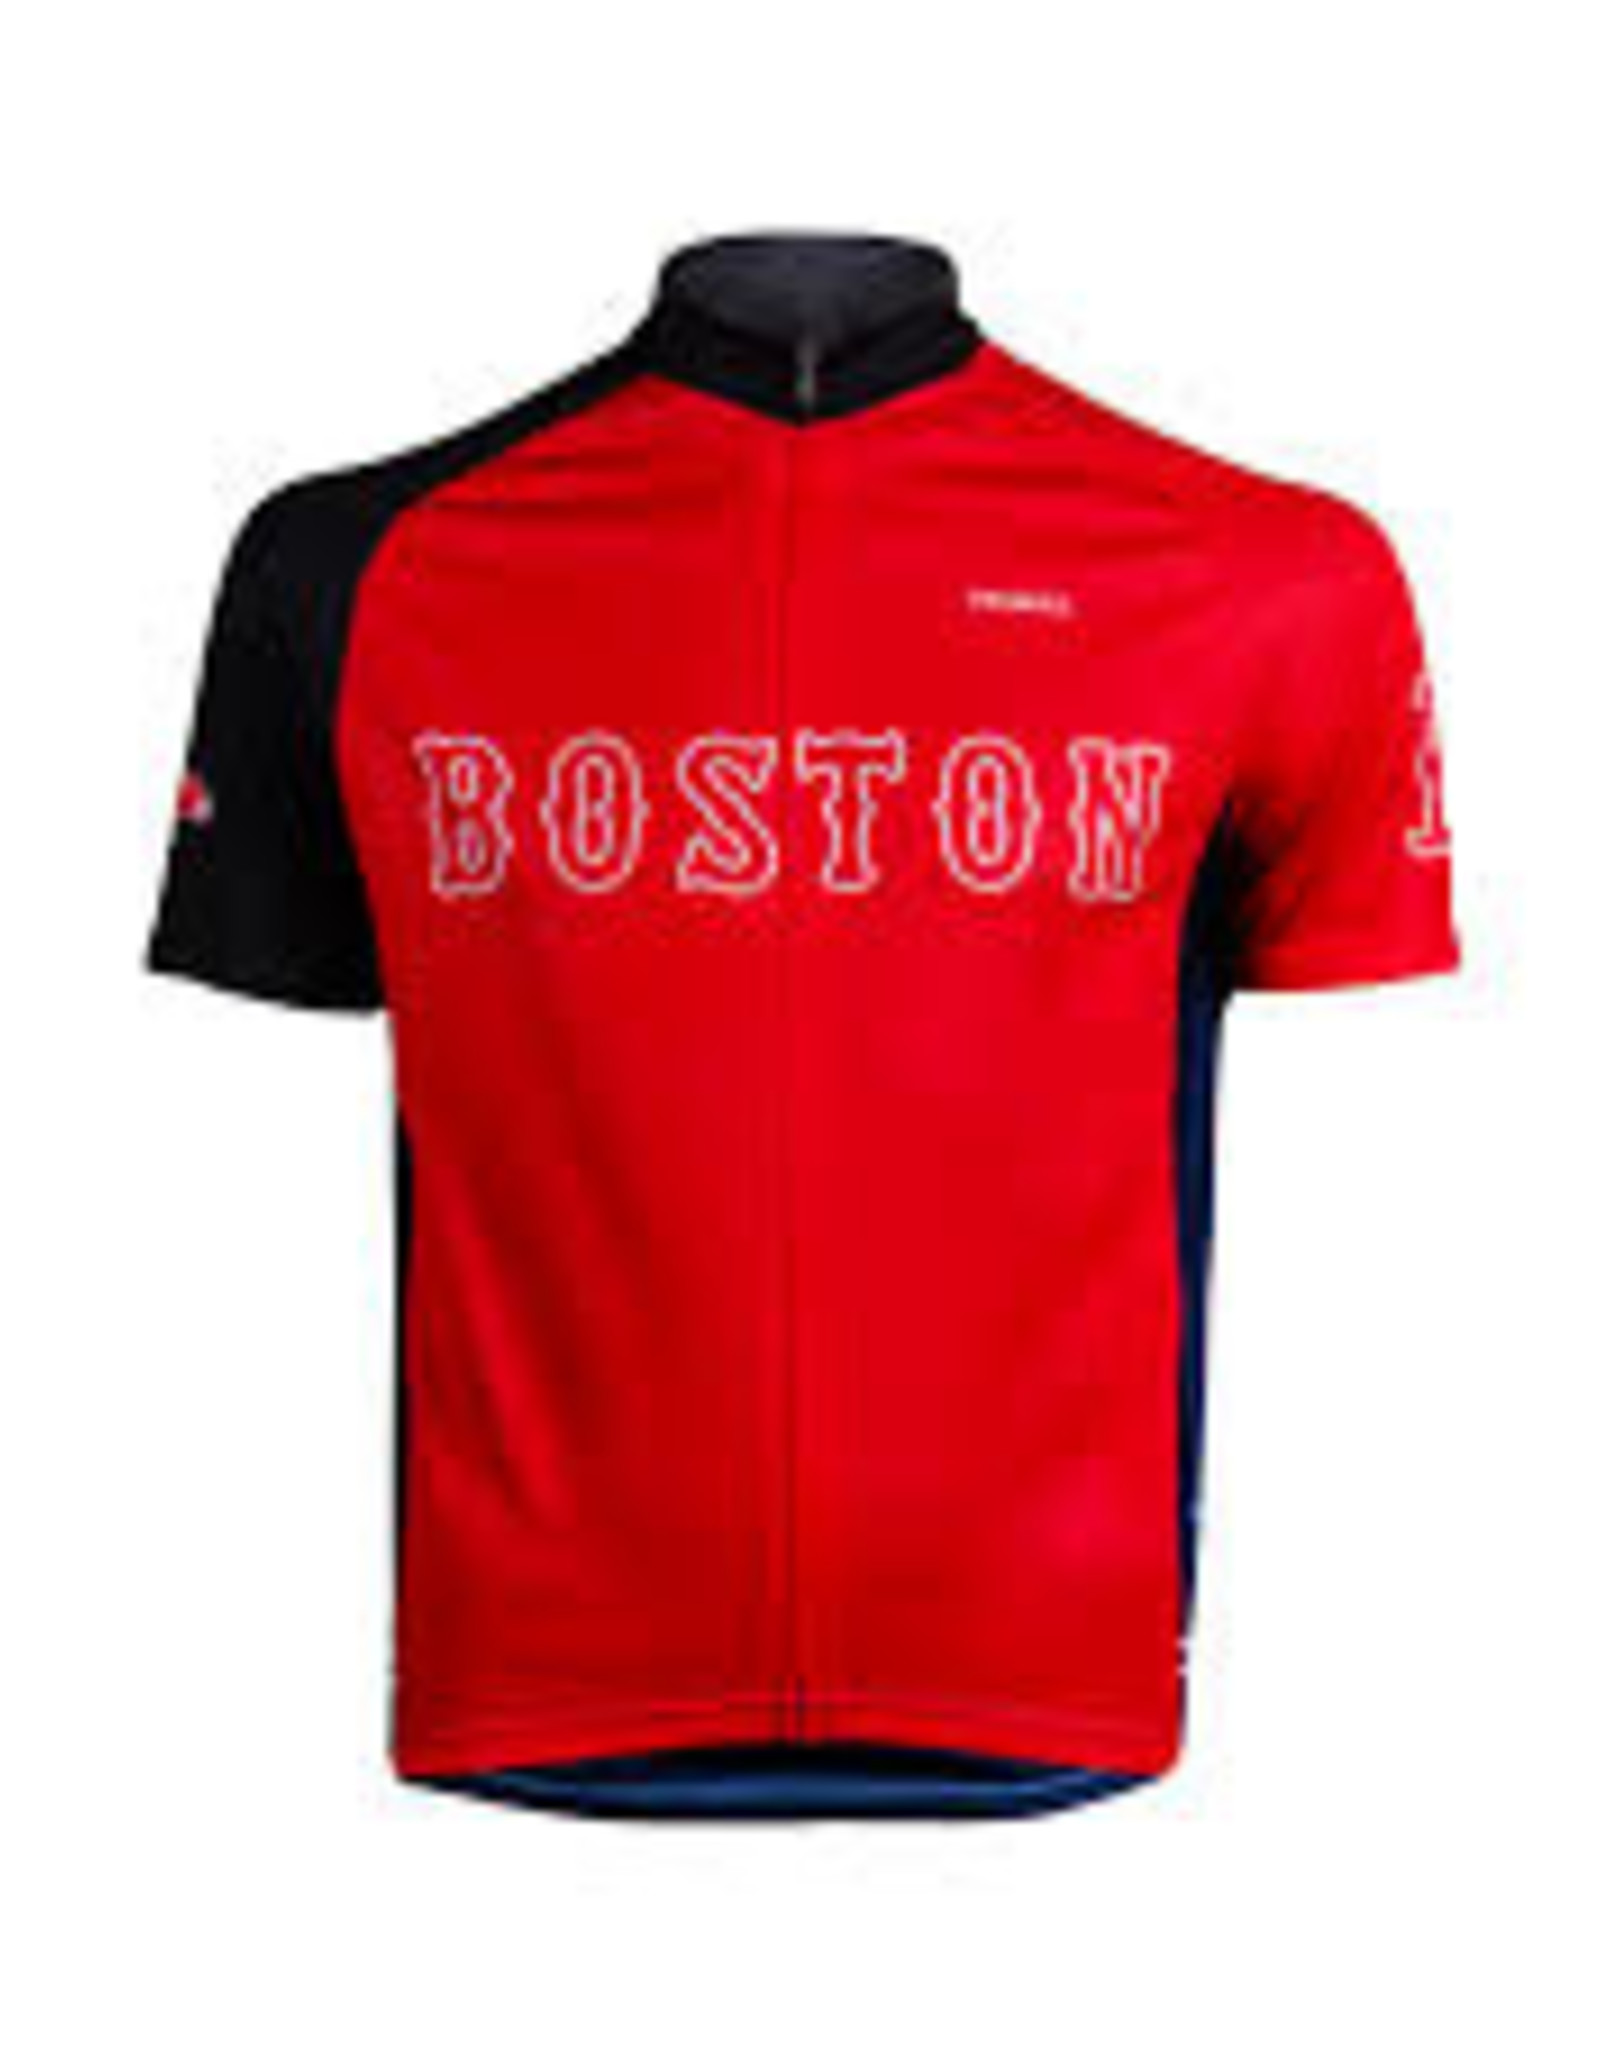 Primal Wear Jersey - Primal Boston World Champions Red Sox